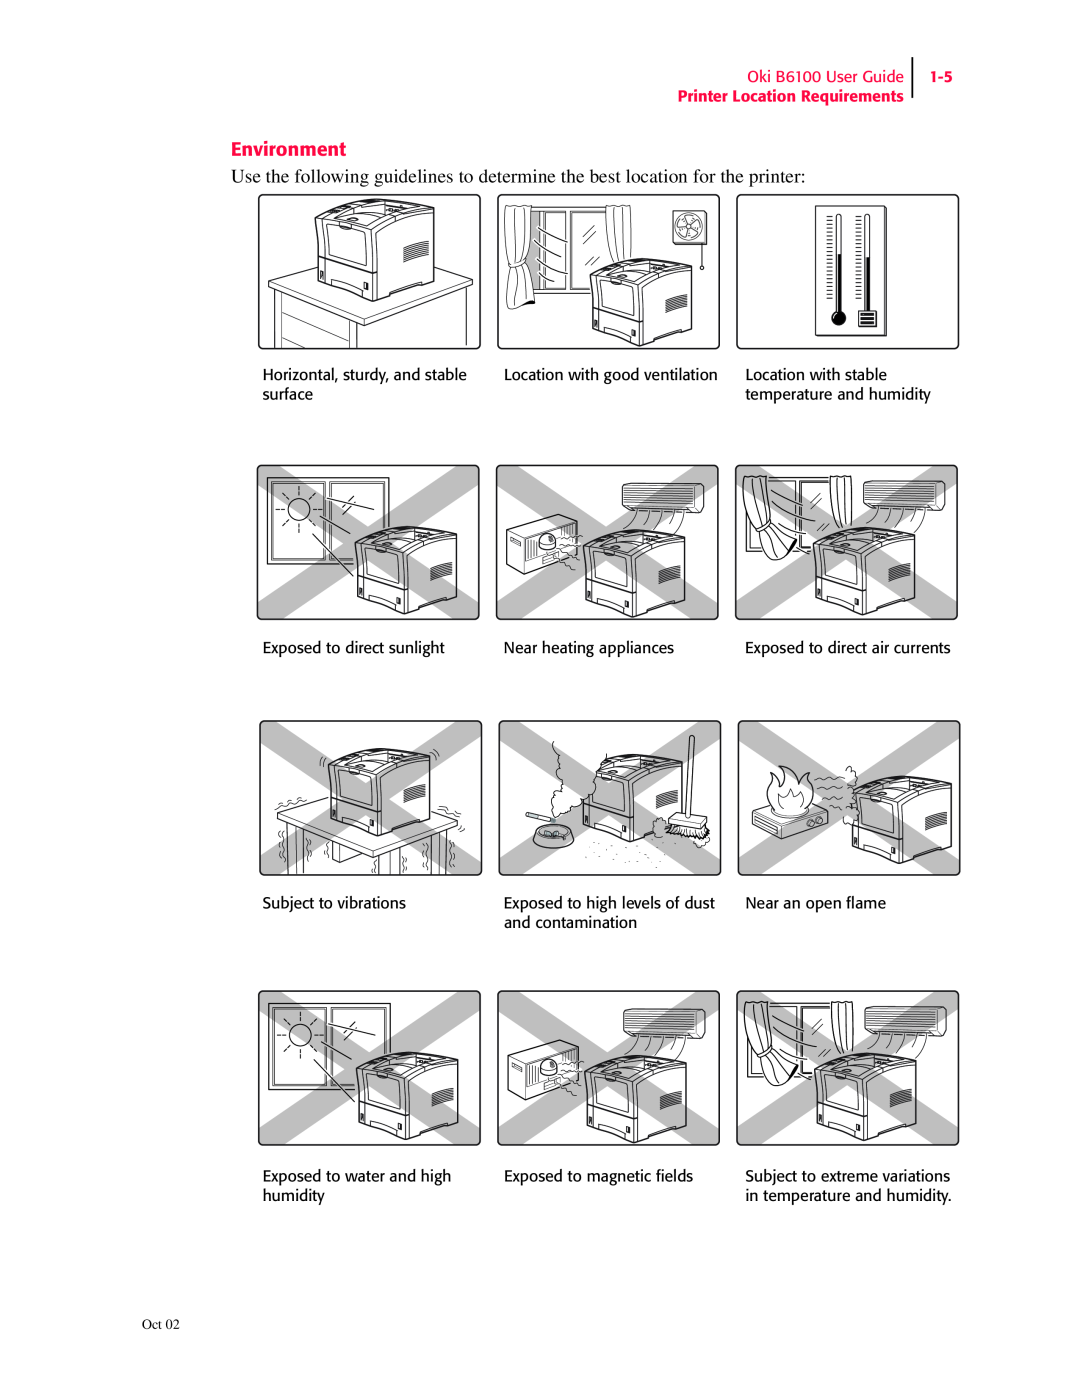 Oki manual Environment, Oki B6100 User Guide Printer Location Requirements 